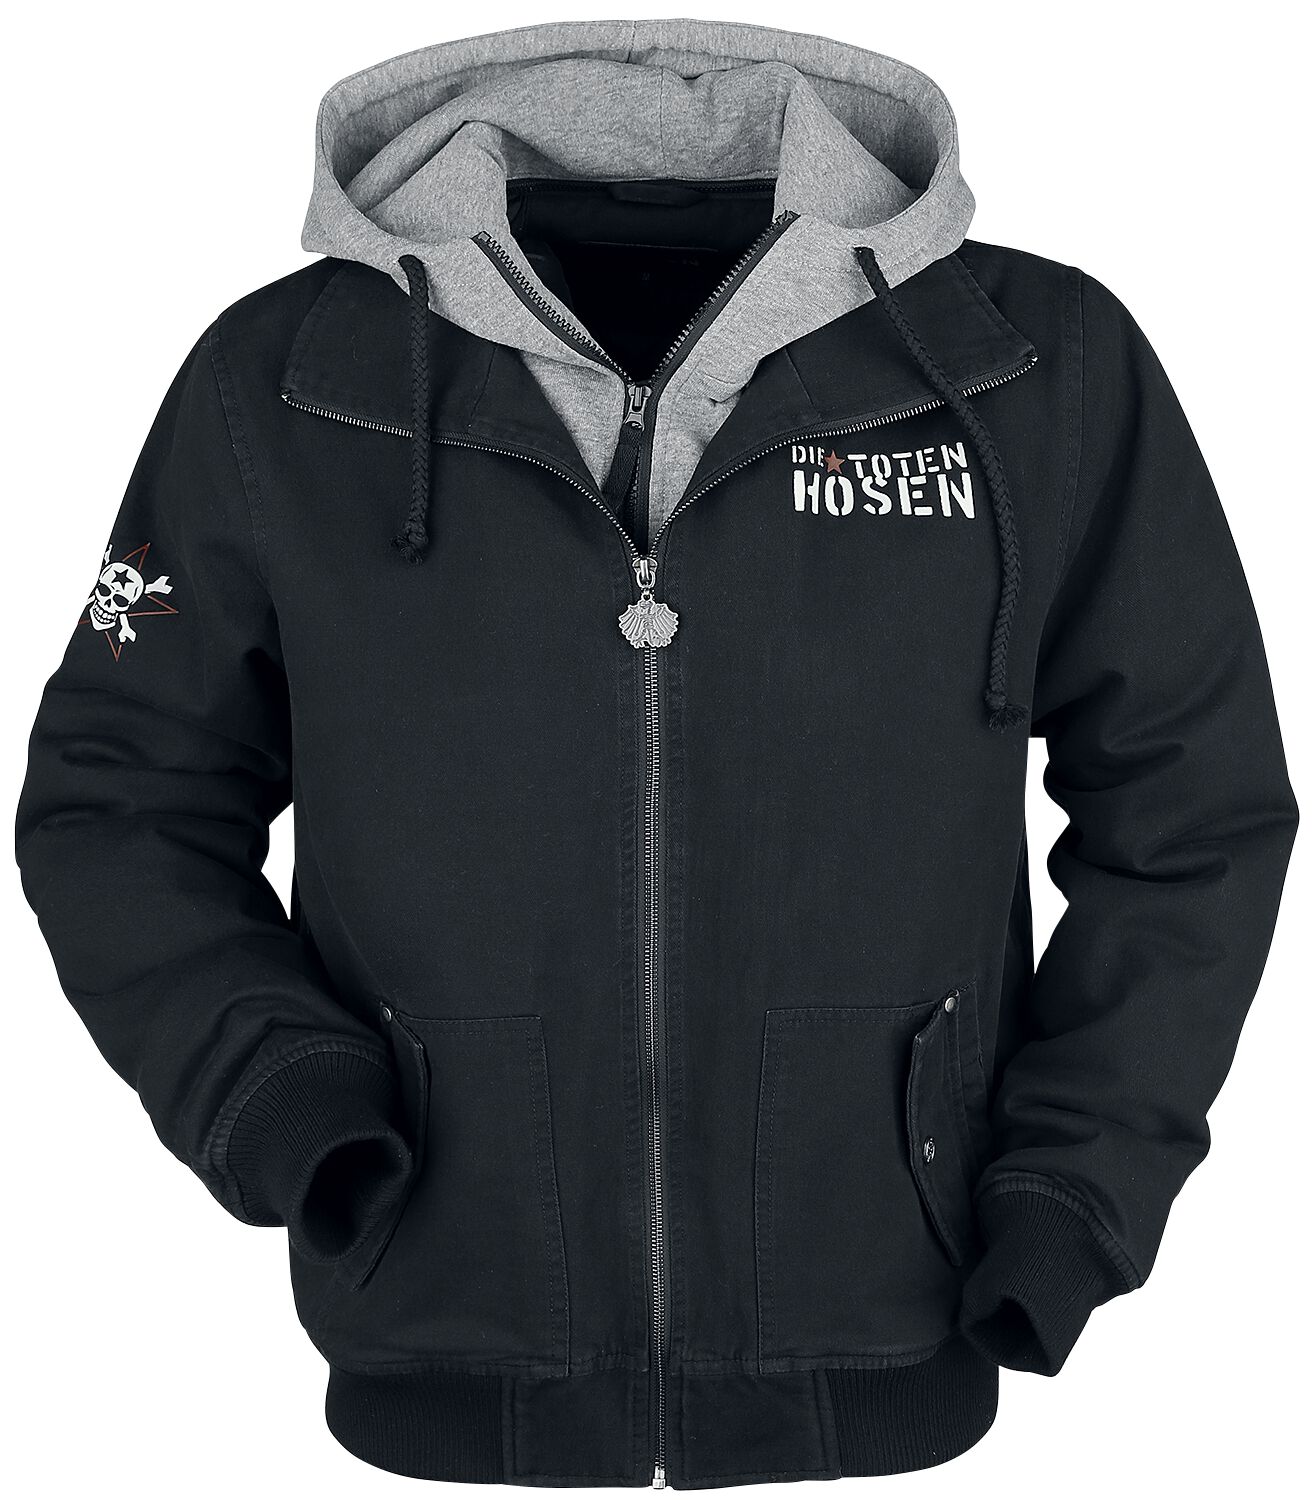 Die Toten Hosen Emp Signature Collection Winter Jacket Black Mottled Grey Buy Now